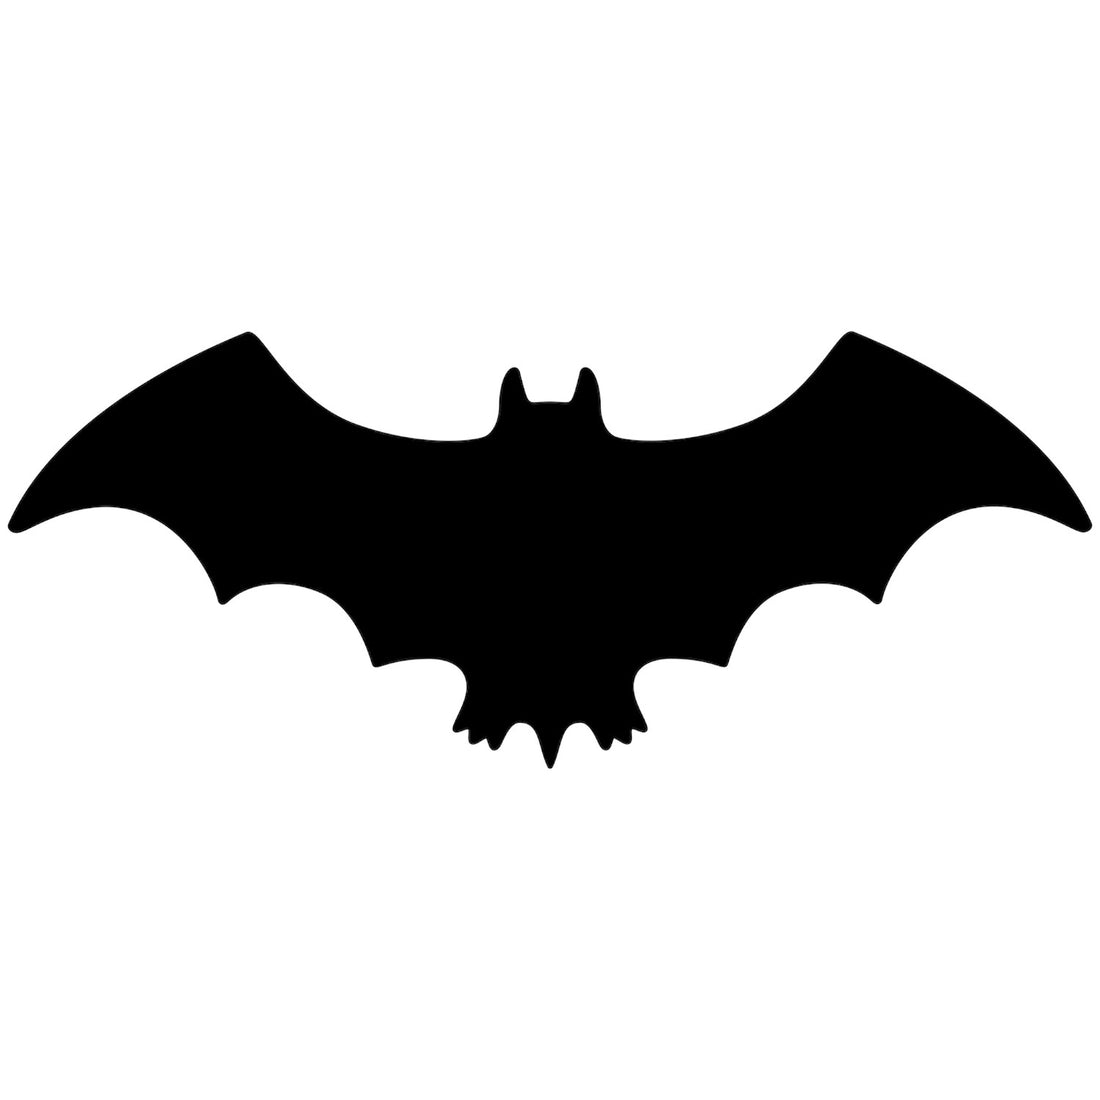 The symmetrical shape of a bat in flight, die-cut from solid black paper.